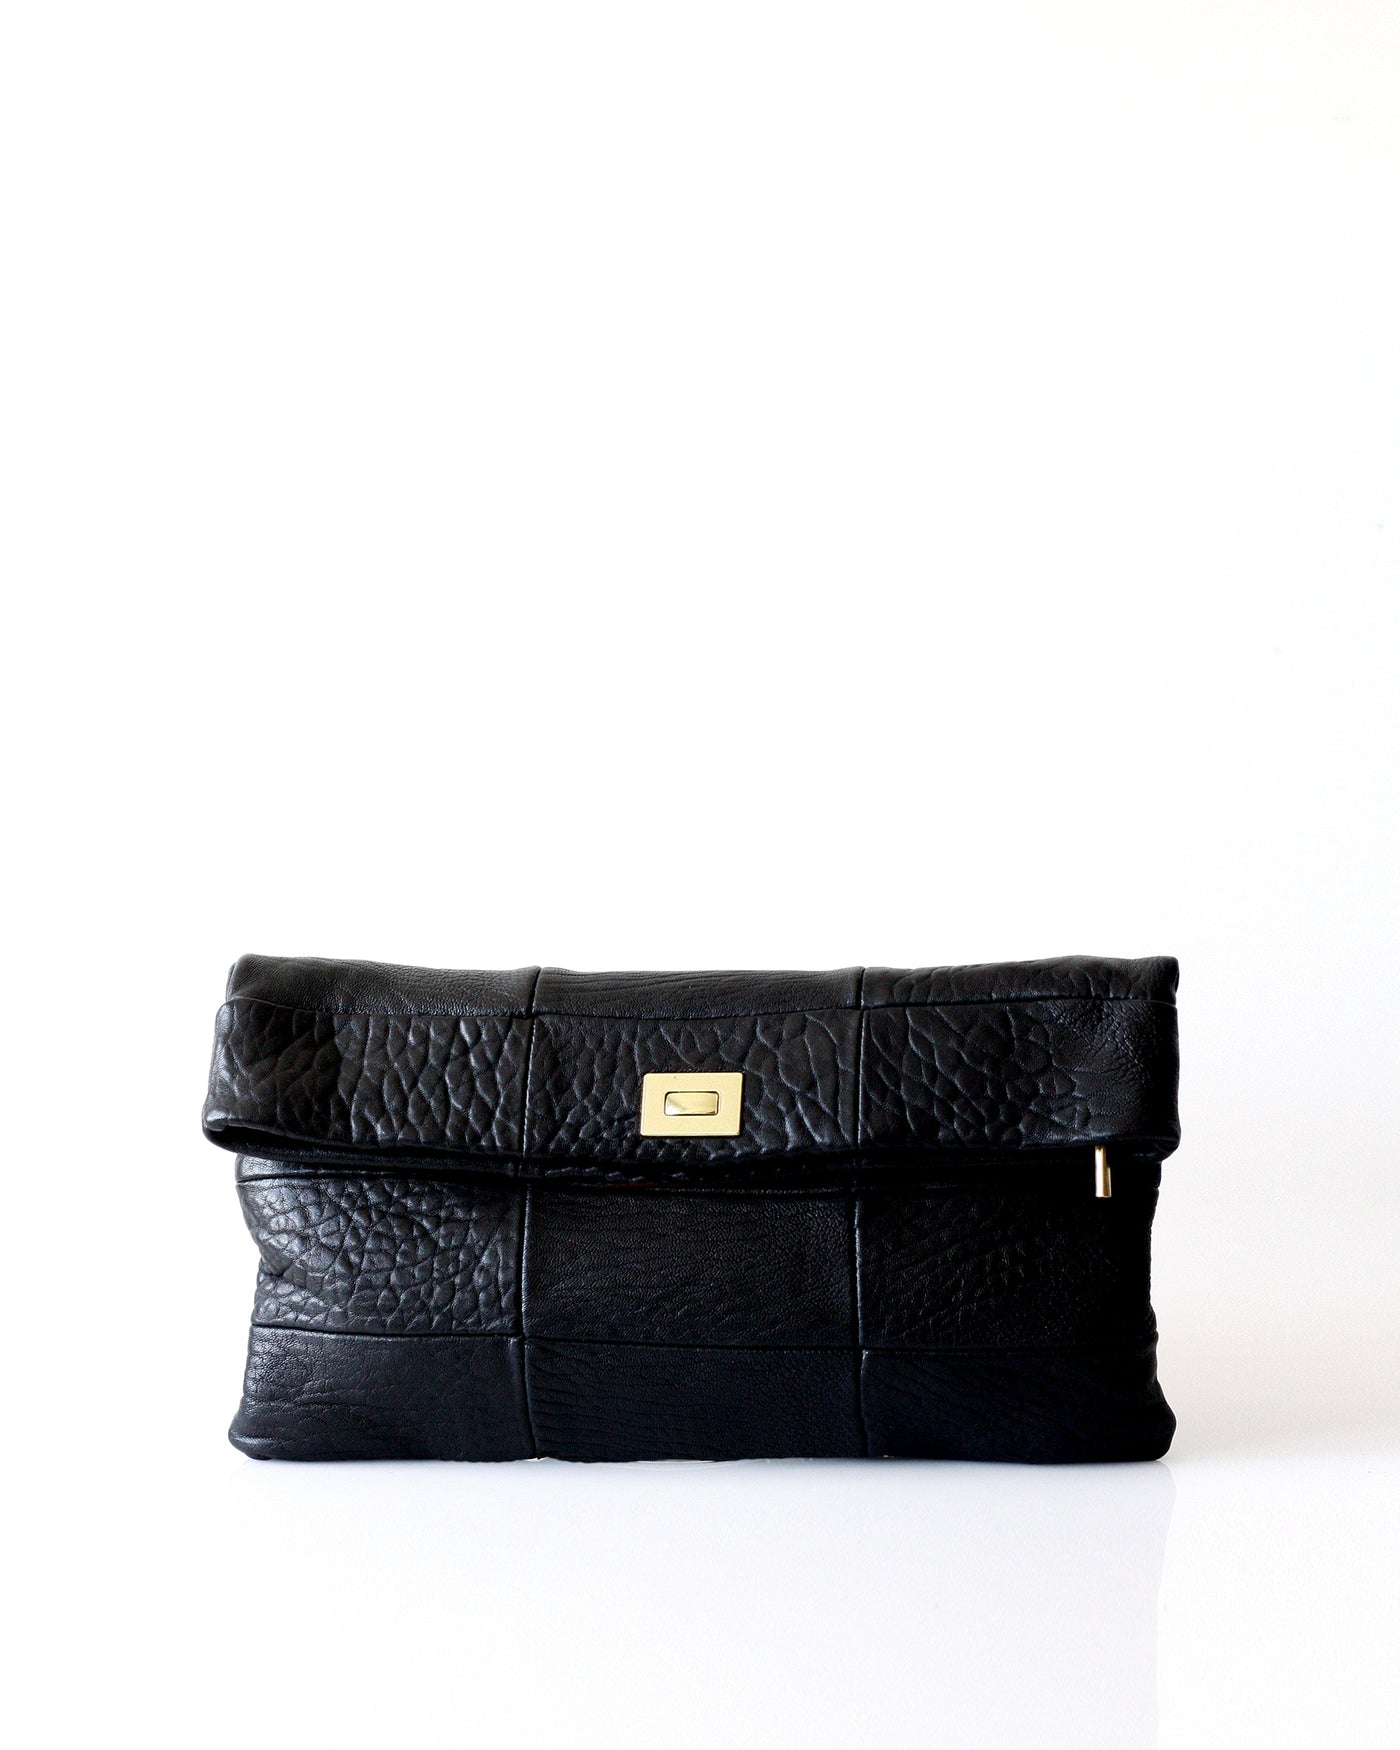 Magdalen Fold Over | Shrunken Lamb - Opelle bag Shrunken Lamb - Opelle leather handbag handcrafted leather bag toronto Canada